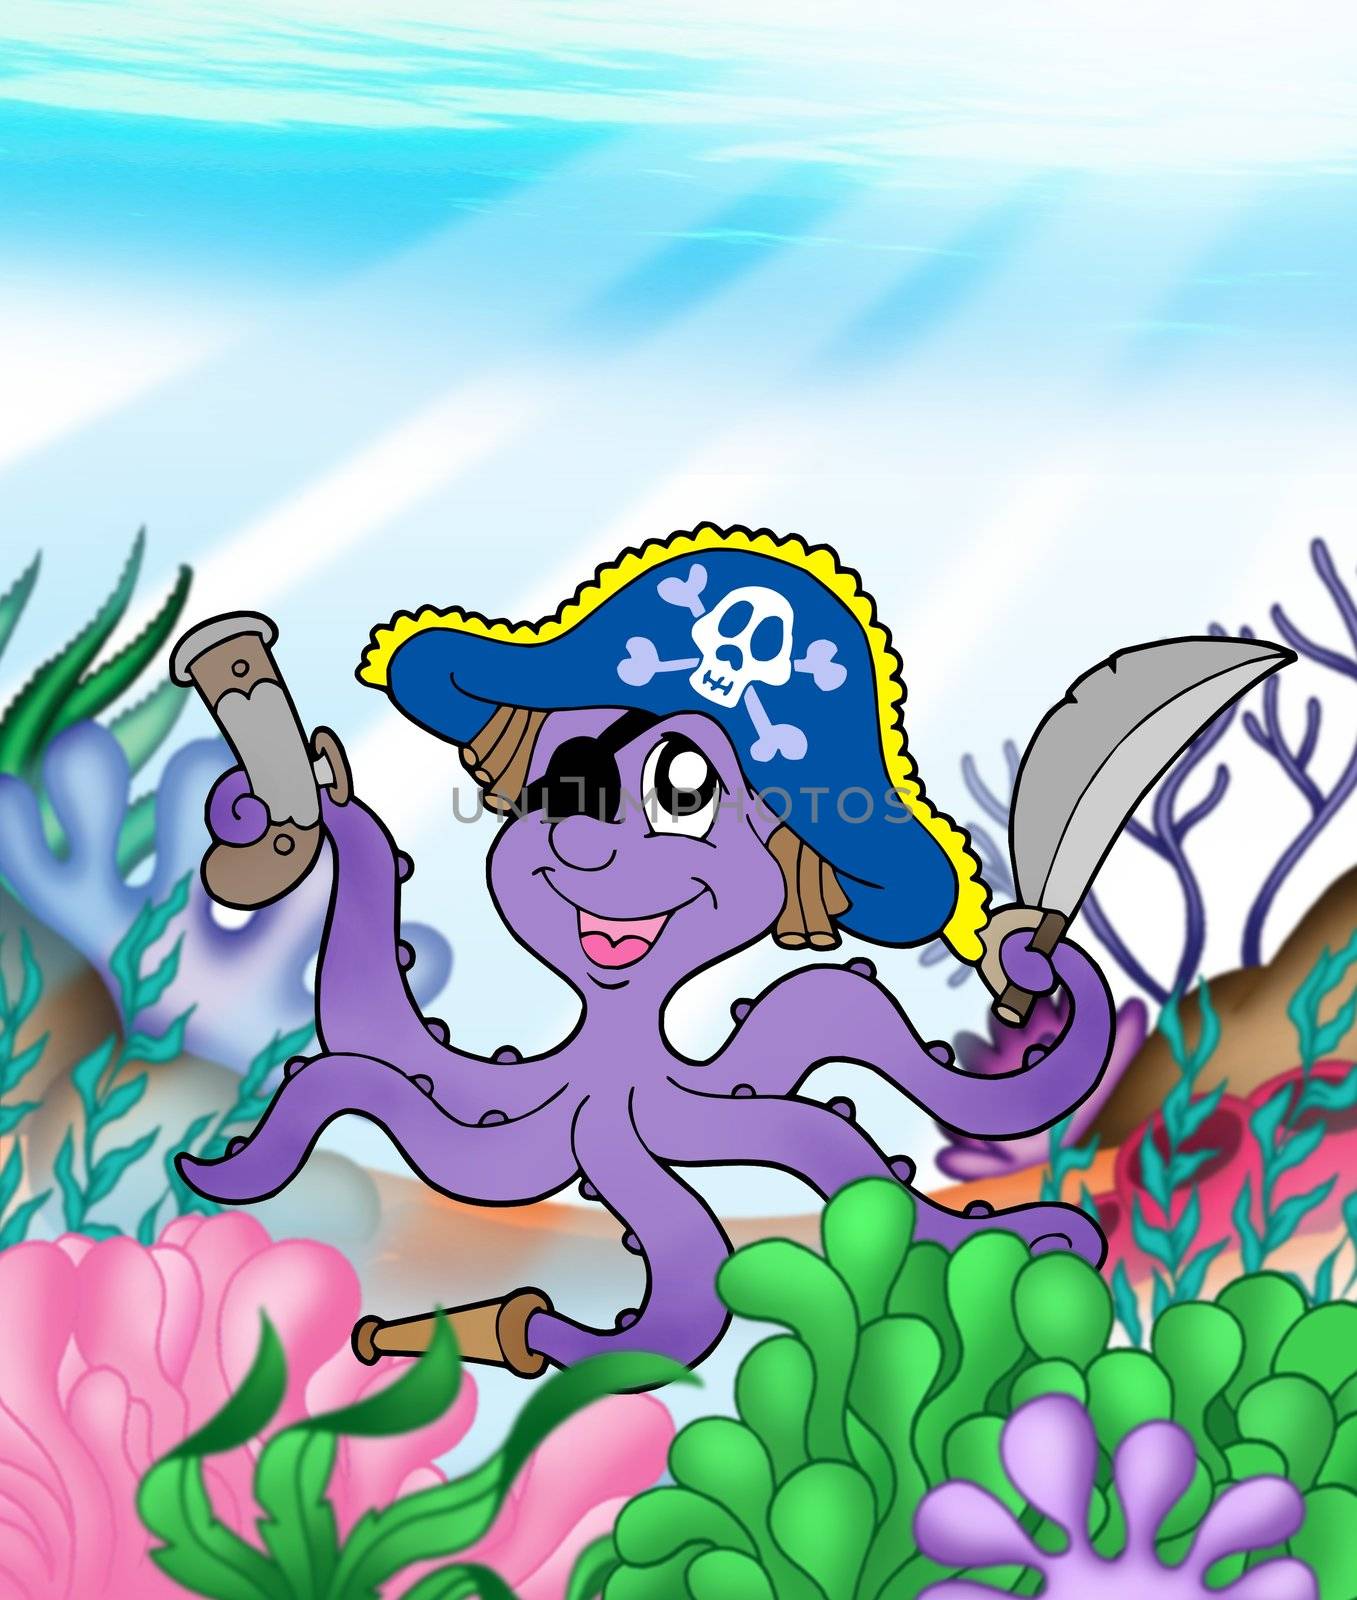 Pirate octopus underwater - color illustration.